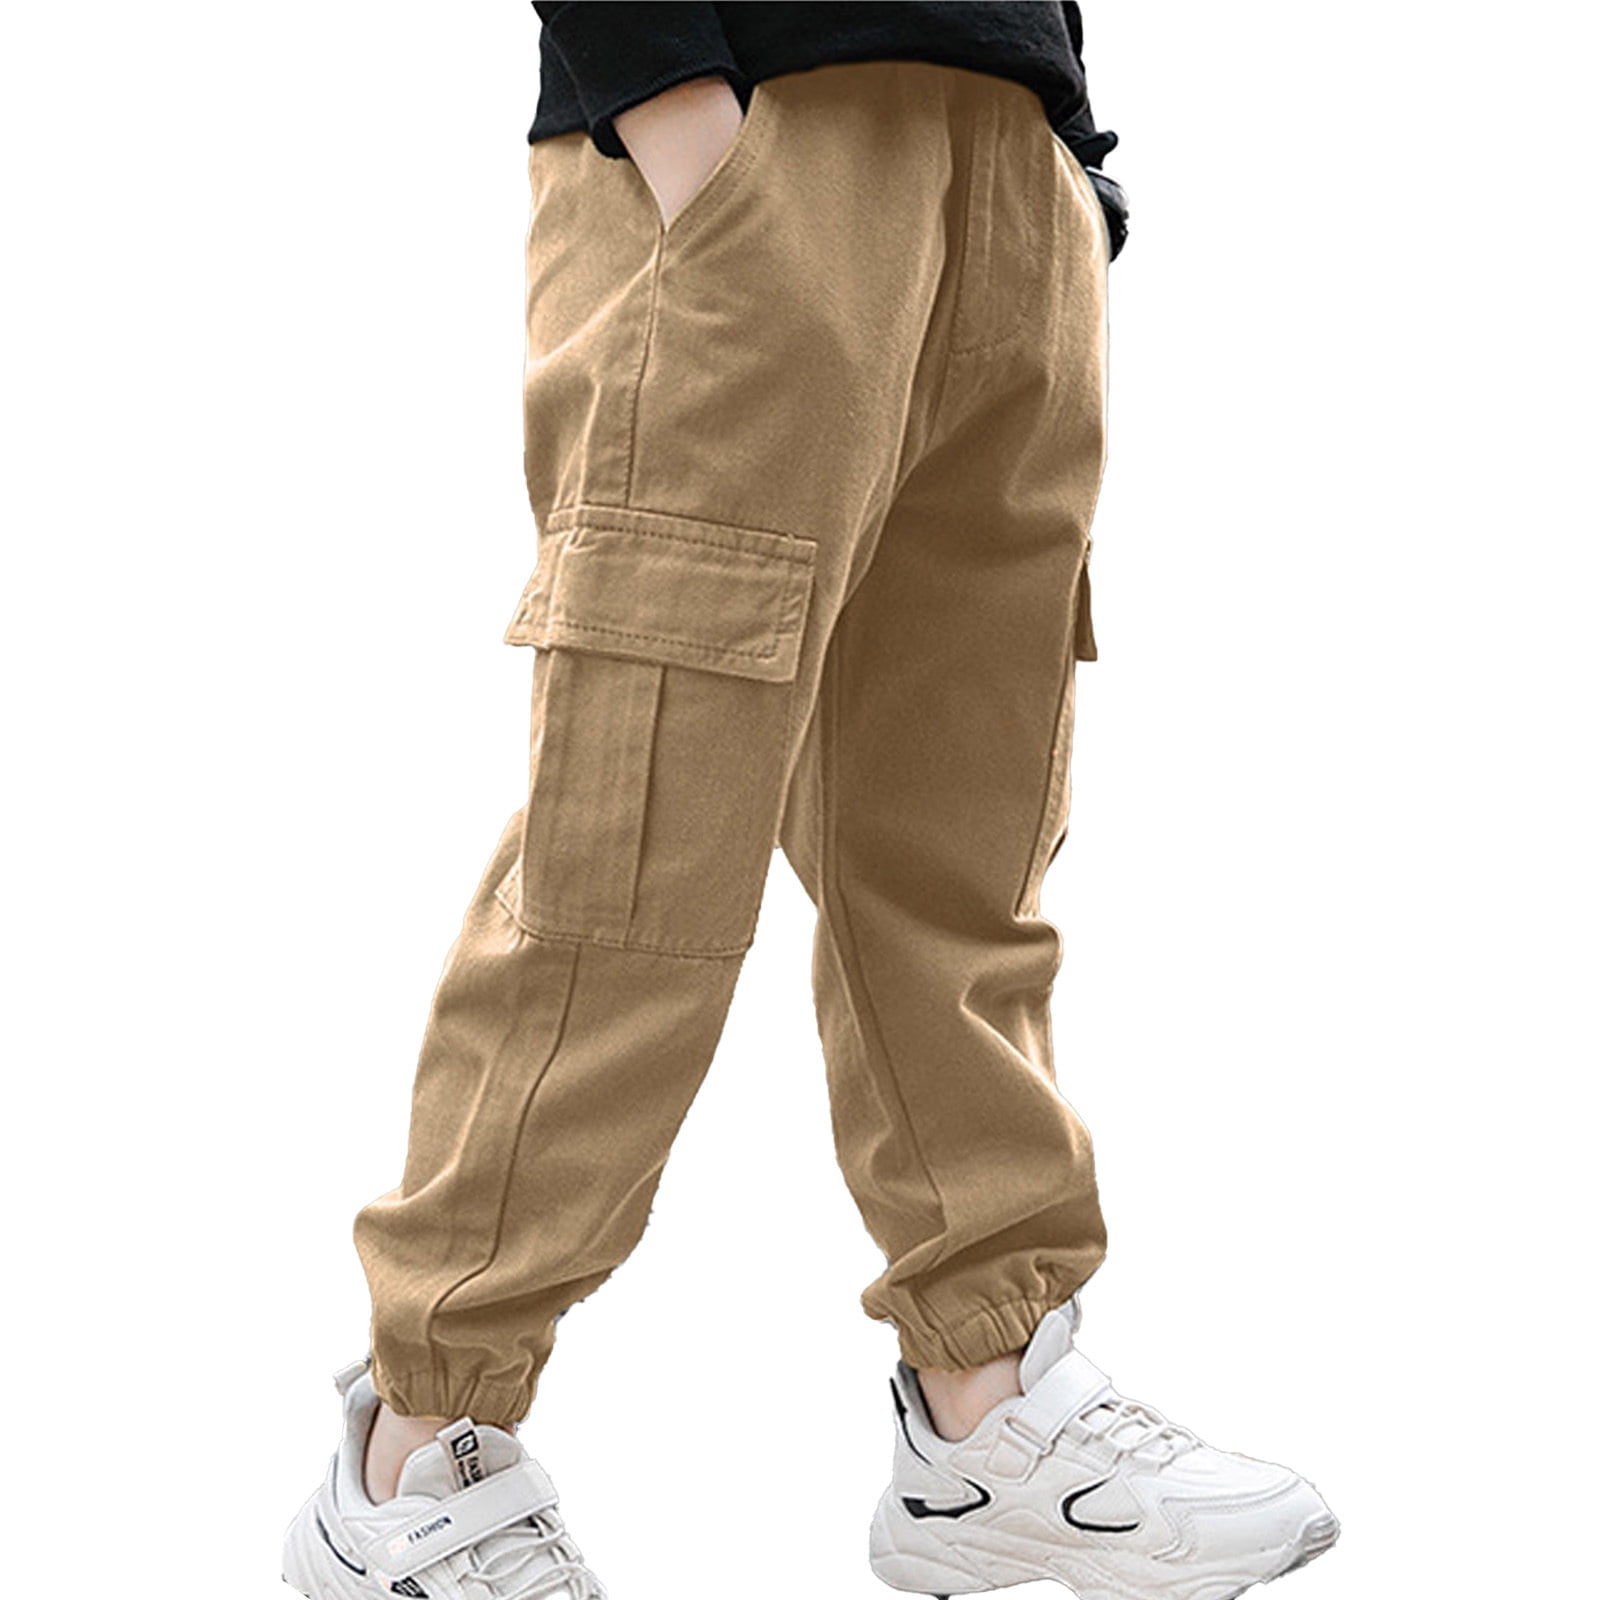 inhzoy Kids Boys Cargo Pants Hip Hop Street Dance Pants Trousers Khaki 14 